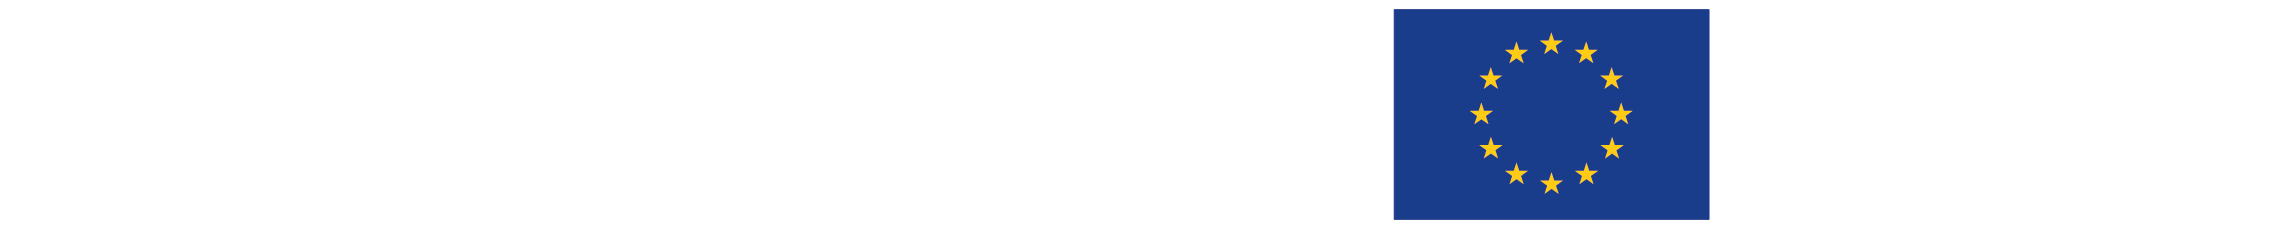 LEP, West Yorkshire Combined Authority, European Union logos